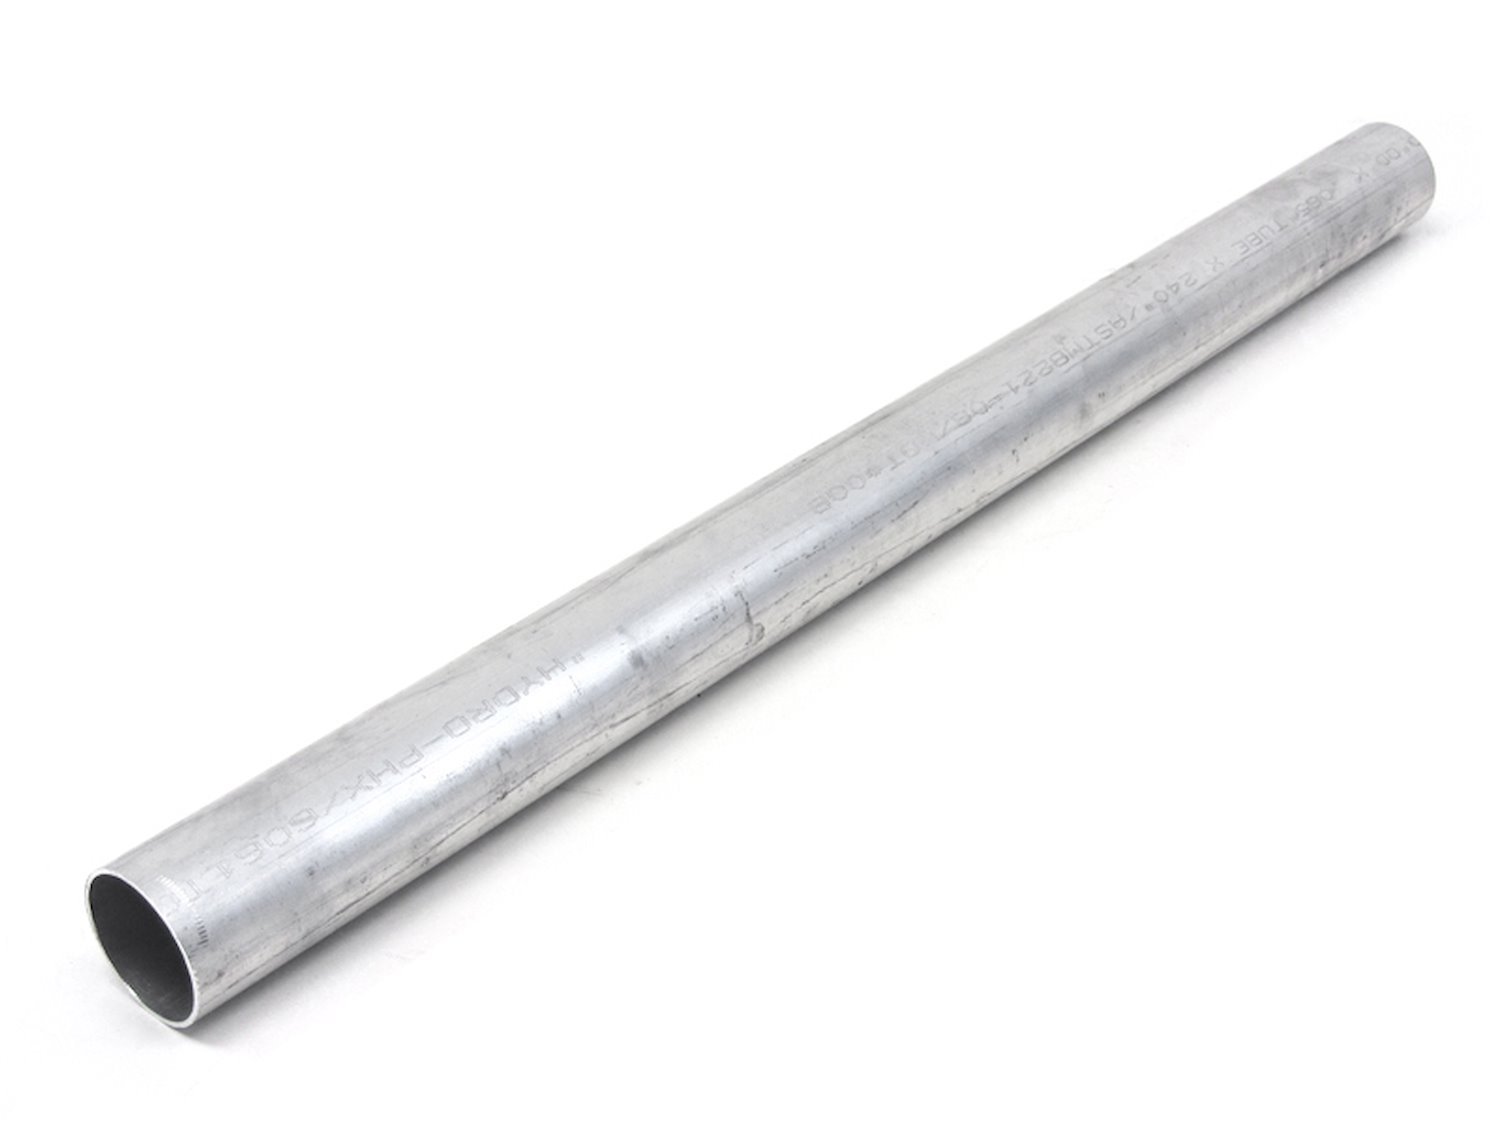 AST-038 Aluminum Tubing, 6061 Aluminum, Straight Tubing, 3/8 in. OD, Seamless, Raw Finish, 1 ft. Long